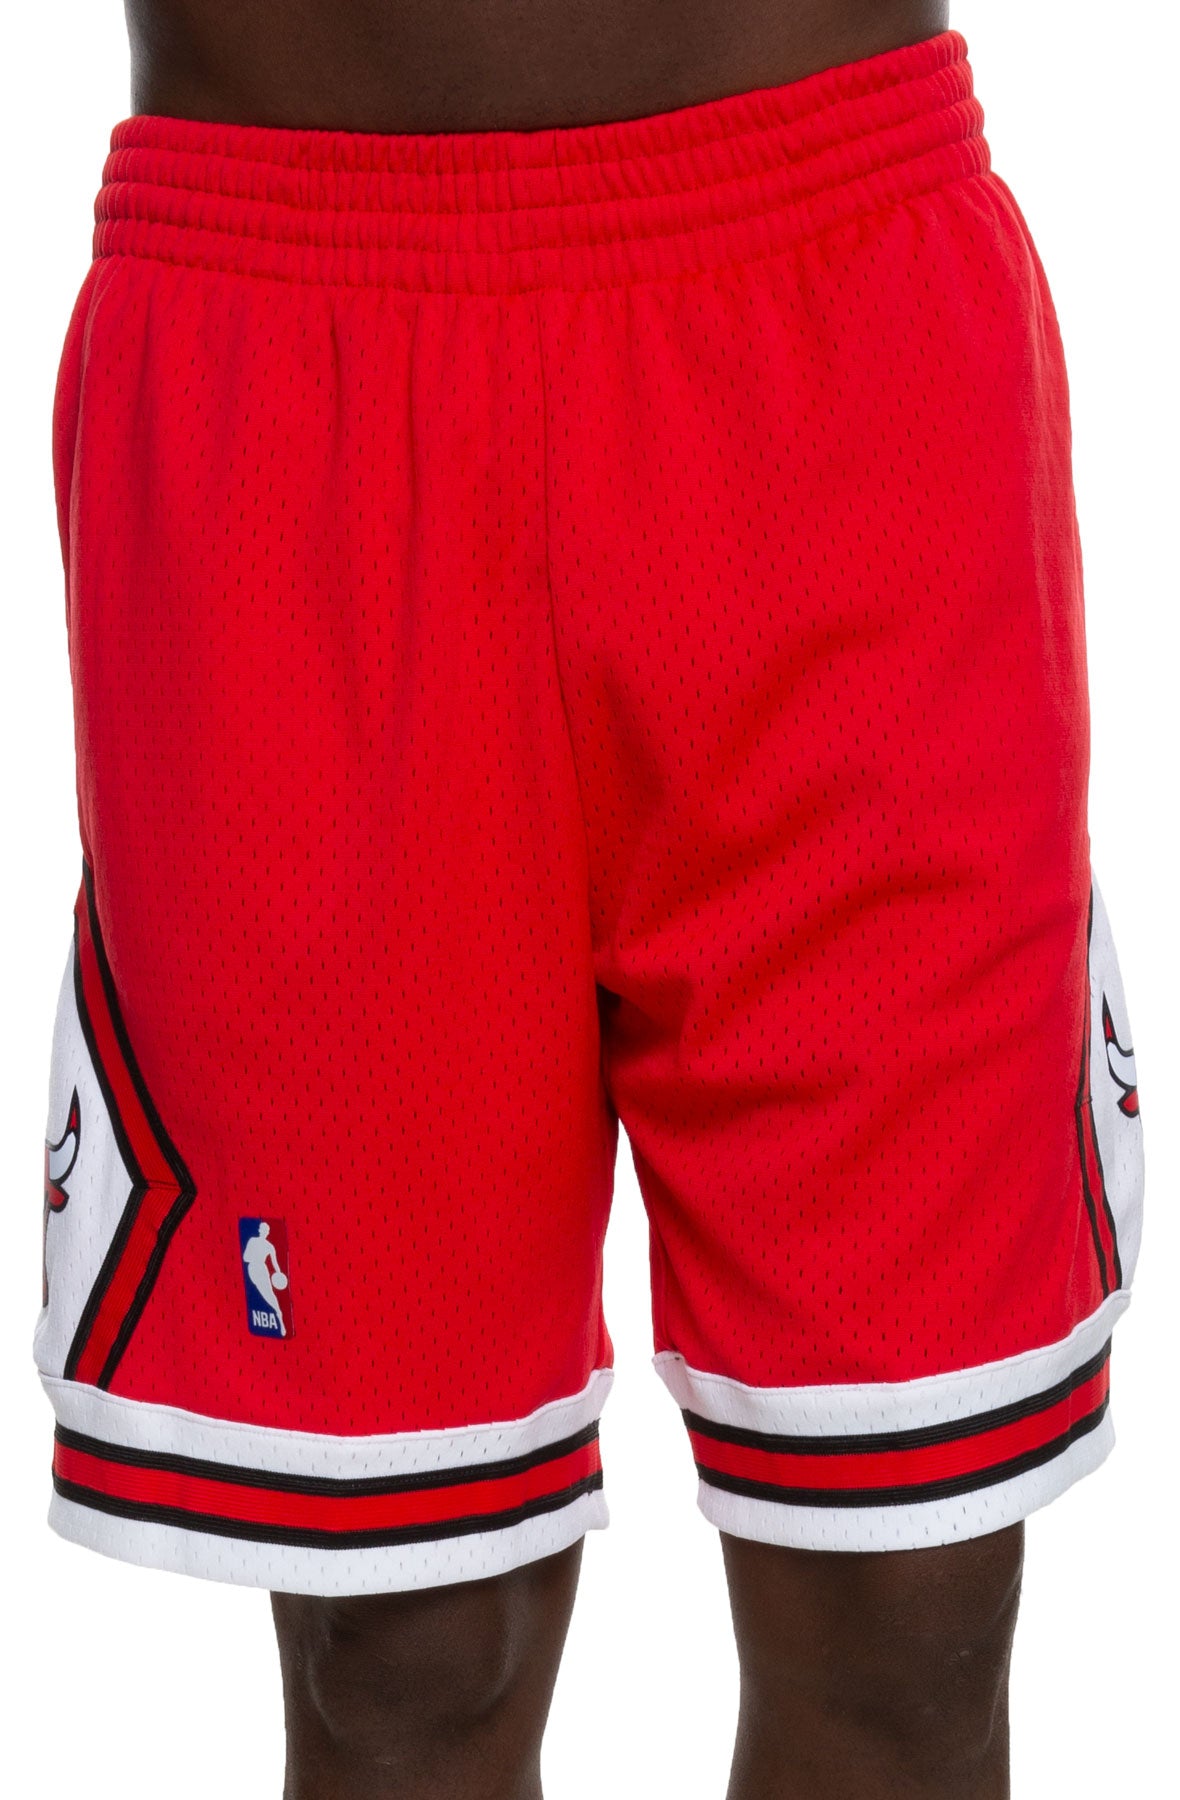 Shorts Chicago Bulls basketball Jersey Champion NBA Red White